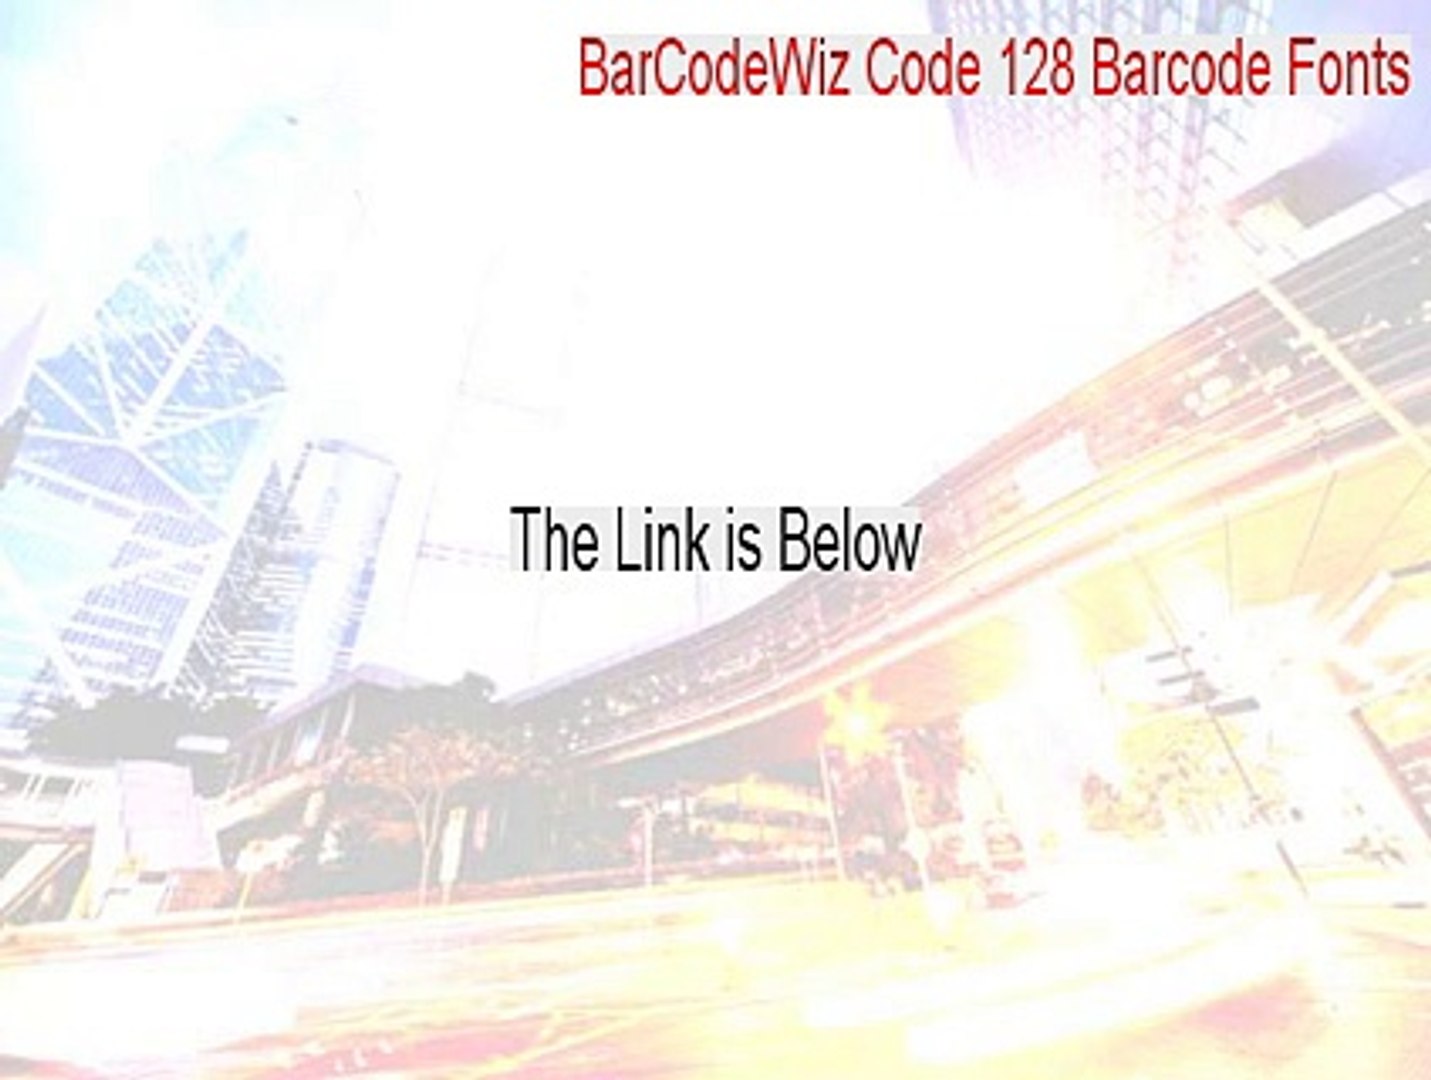 Barcodewiz